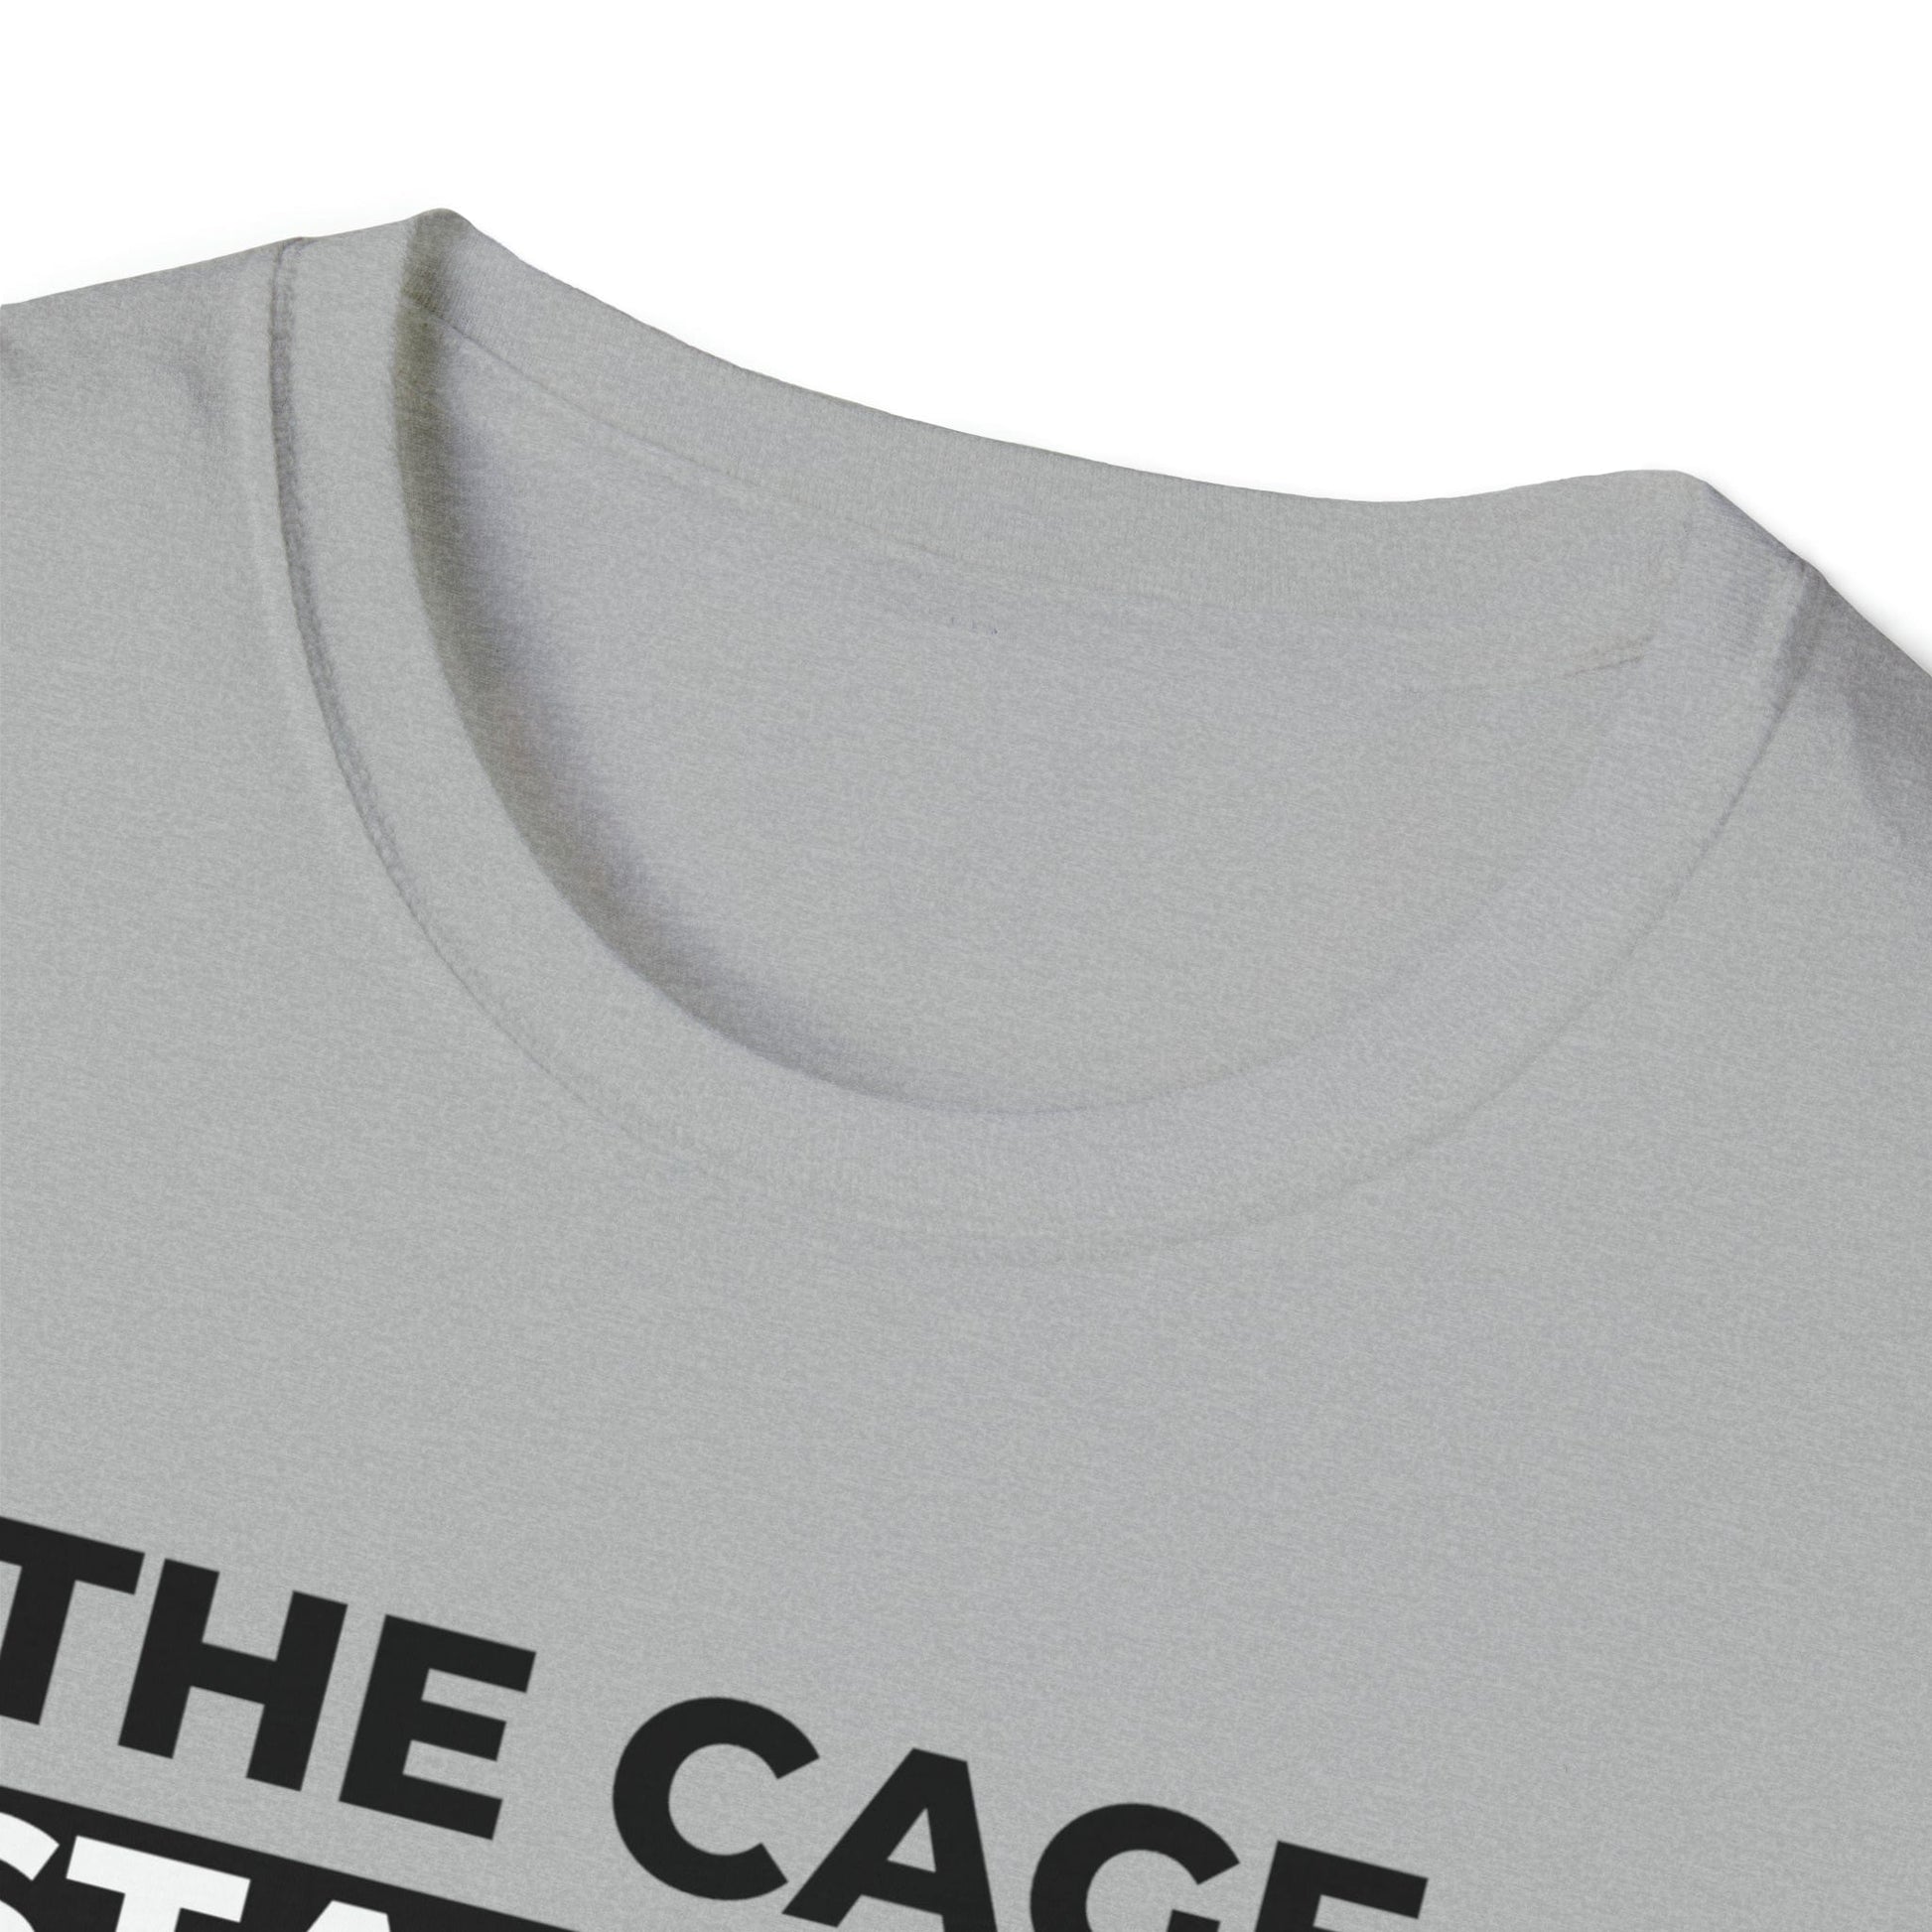 T-Shirt Cage Stays On - Lockedboy Athletics Chastity Tshirt LEATHERDADDY BATOR